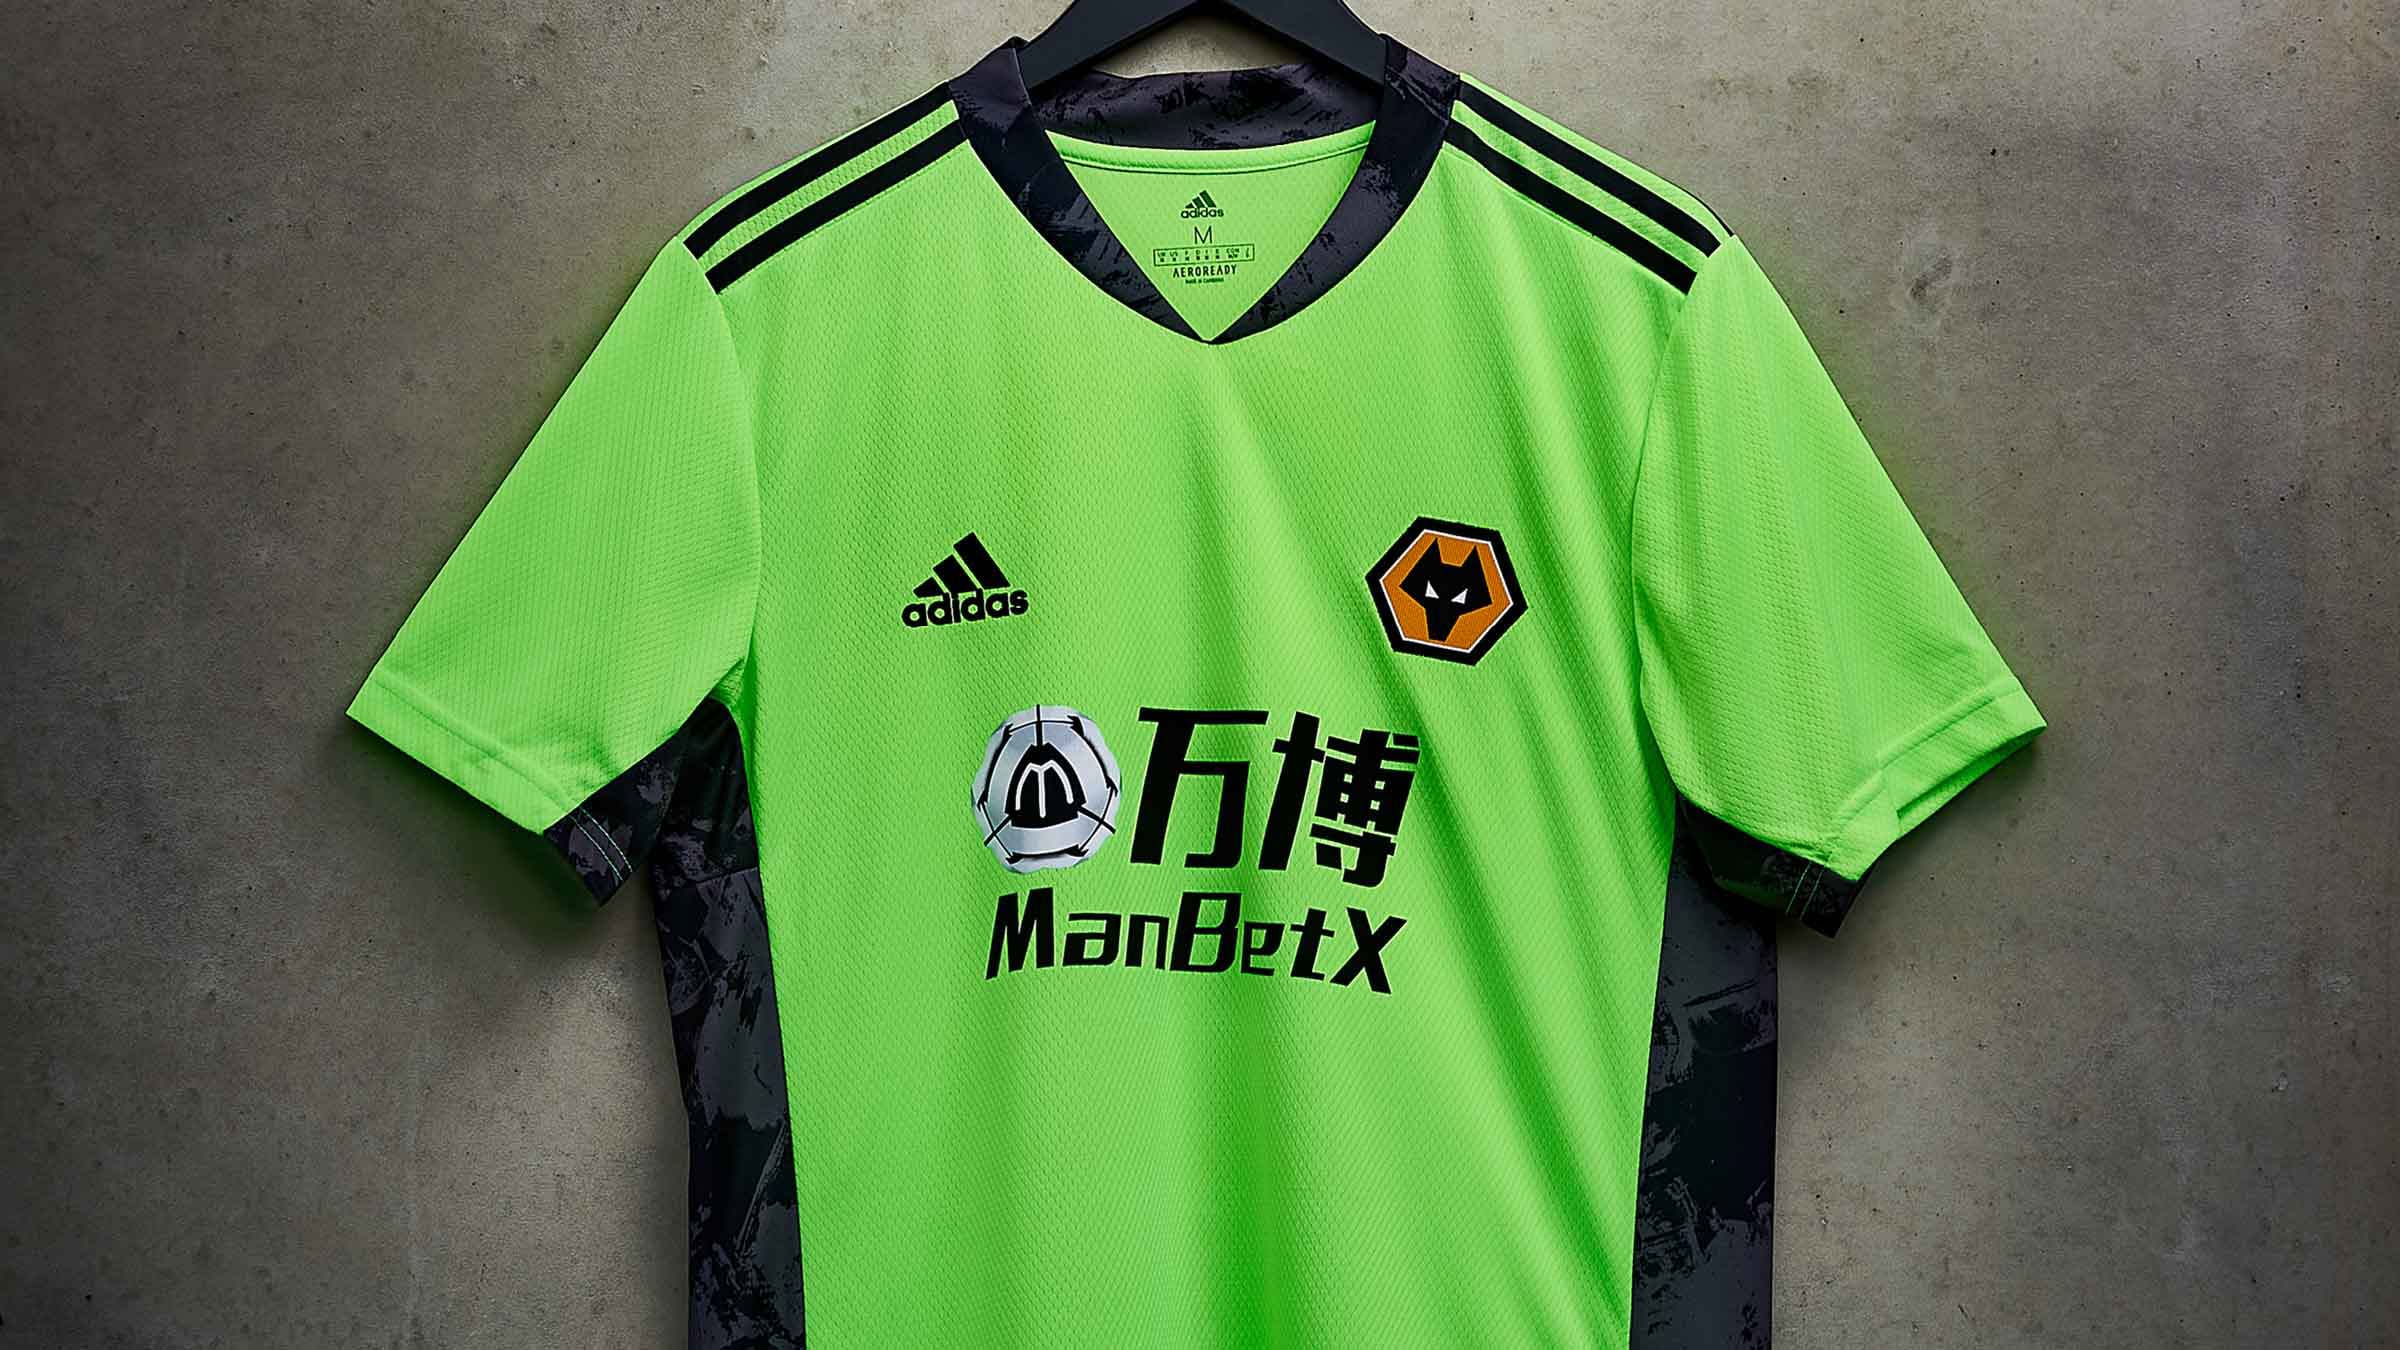 2020/21 home kit revealed | Wolverhampton Wanderers FC